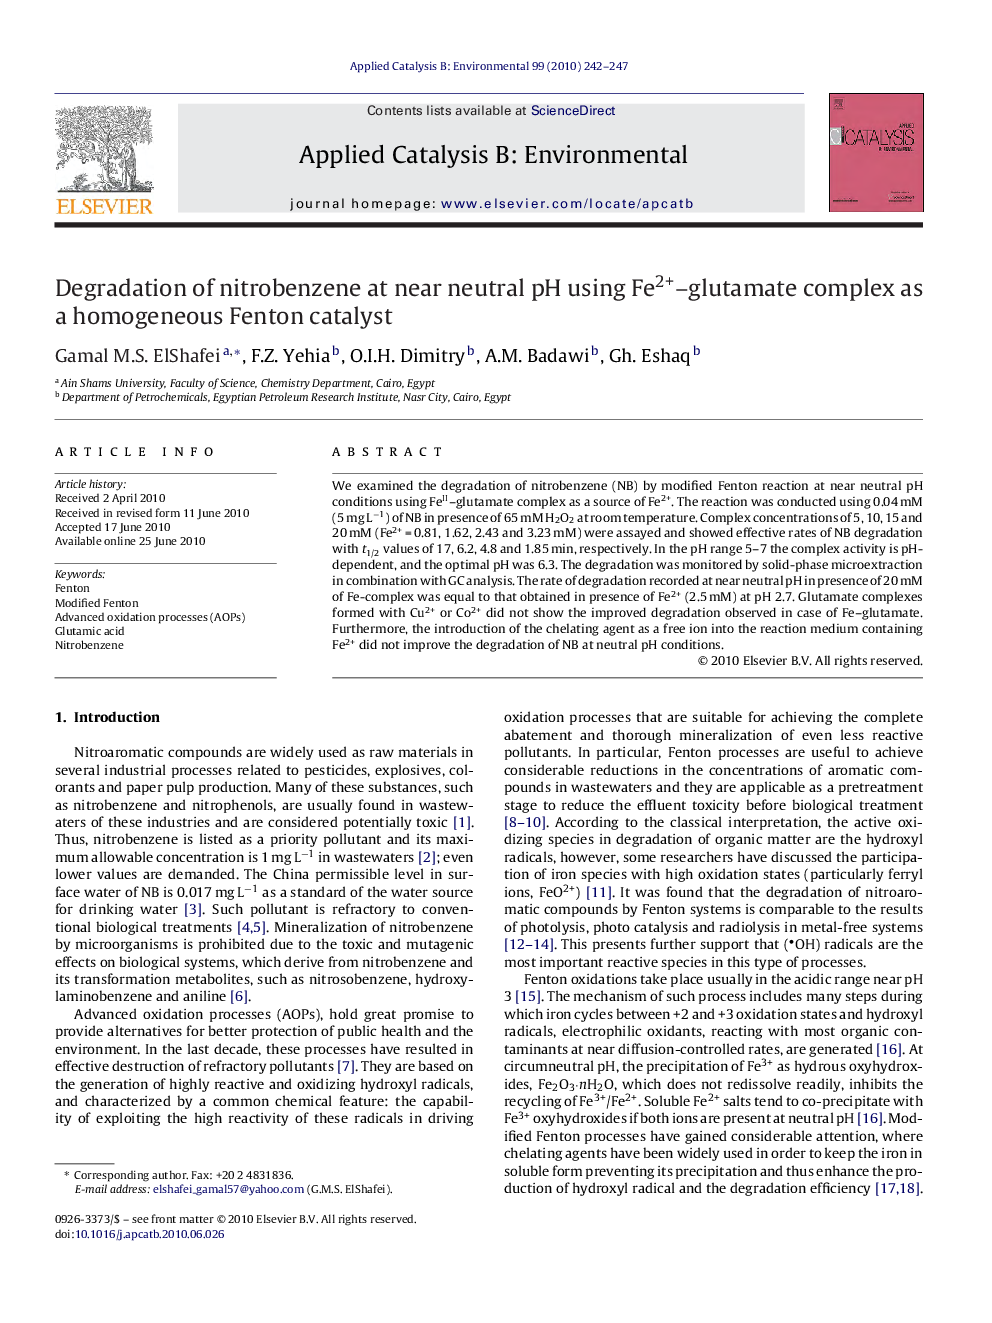 Degradation of nitrobenzene at near neutral pH using Fe2+–glutamate complex as a homogeneous Fenton catalyst